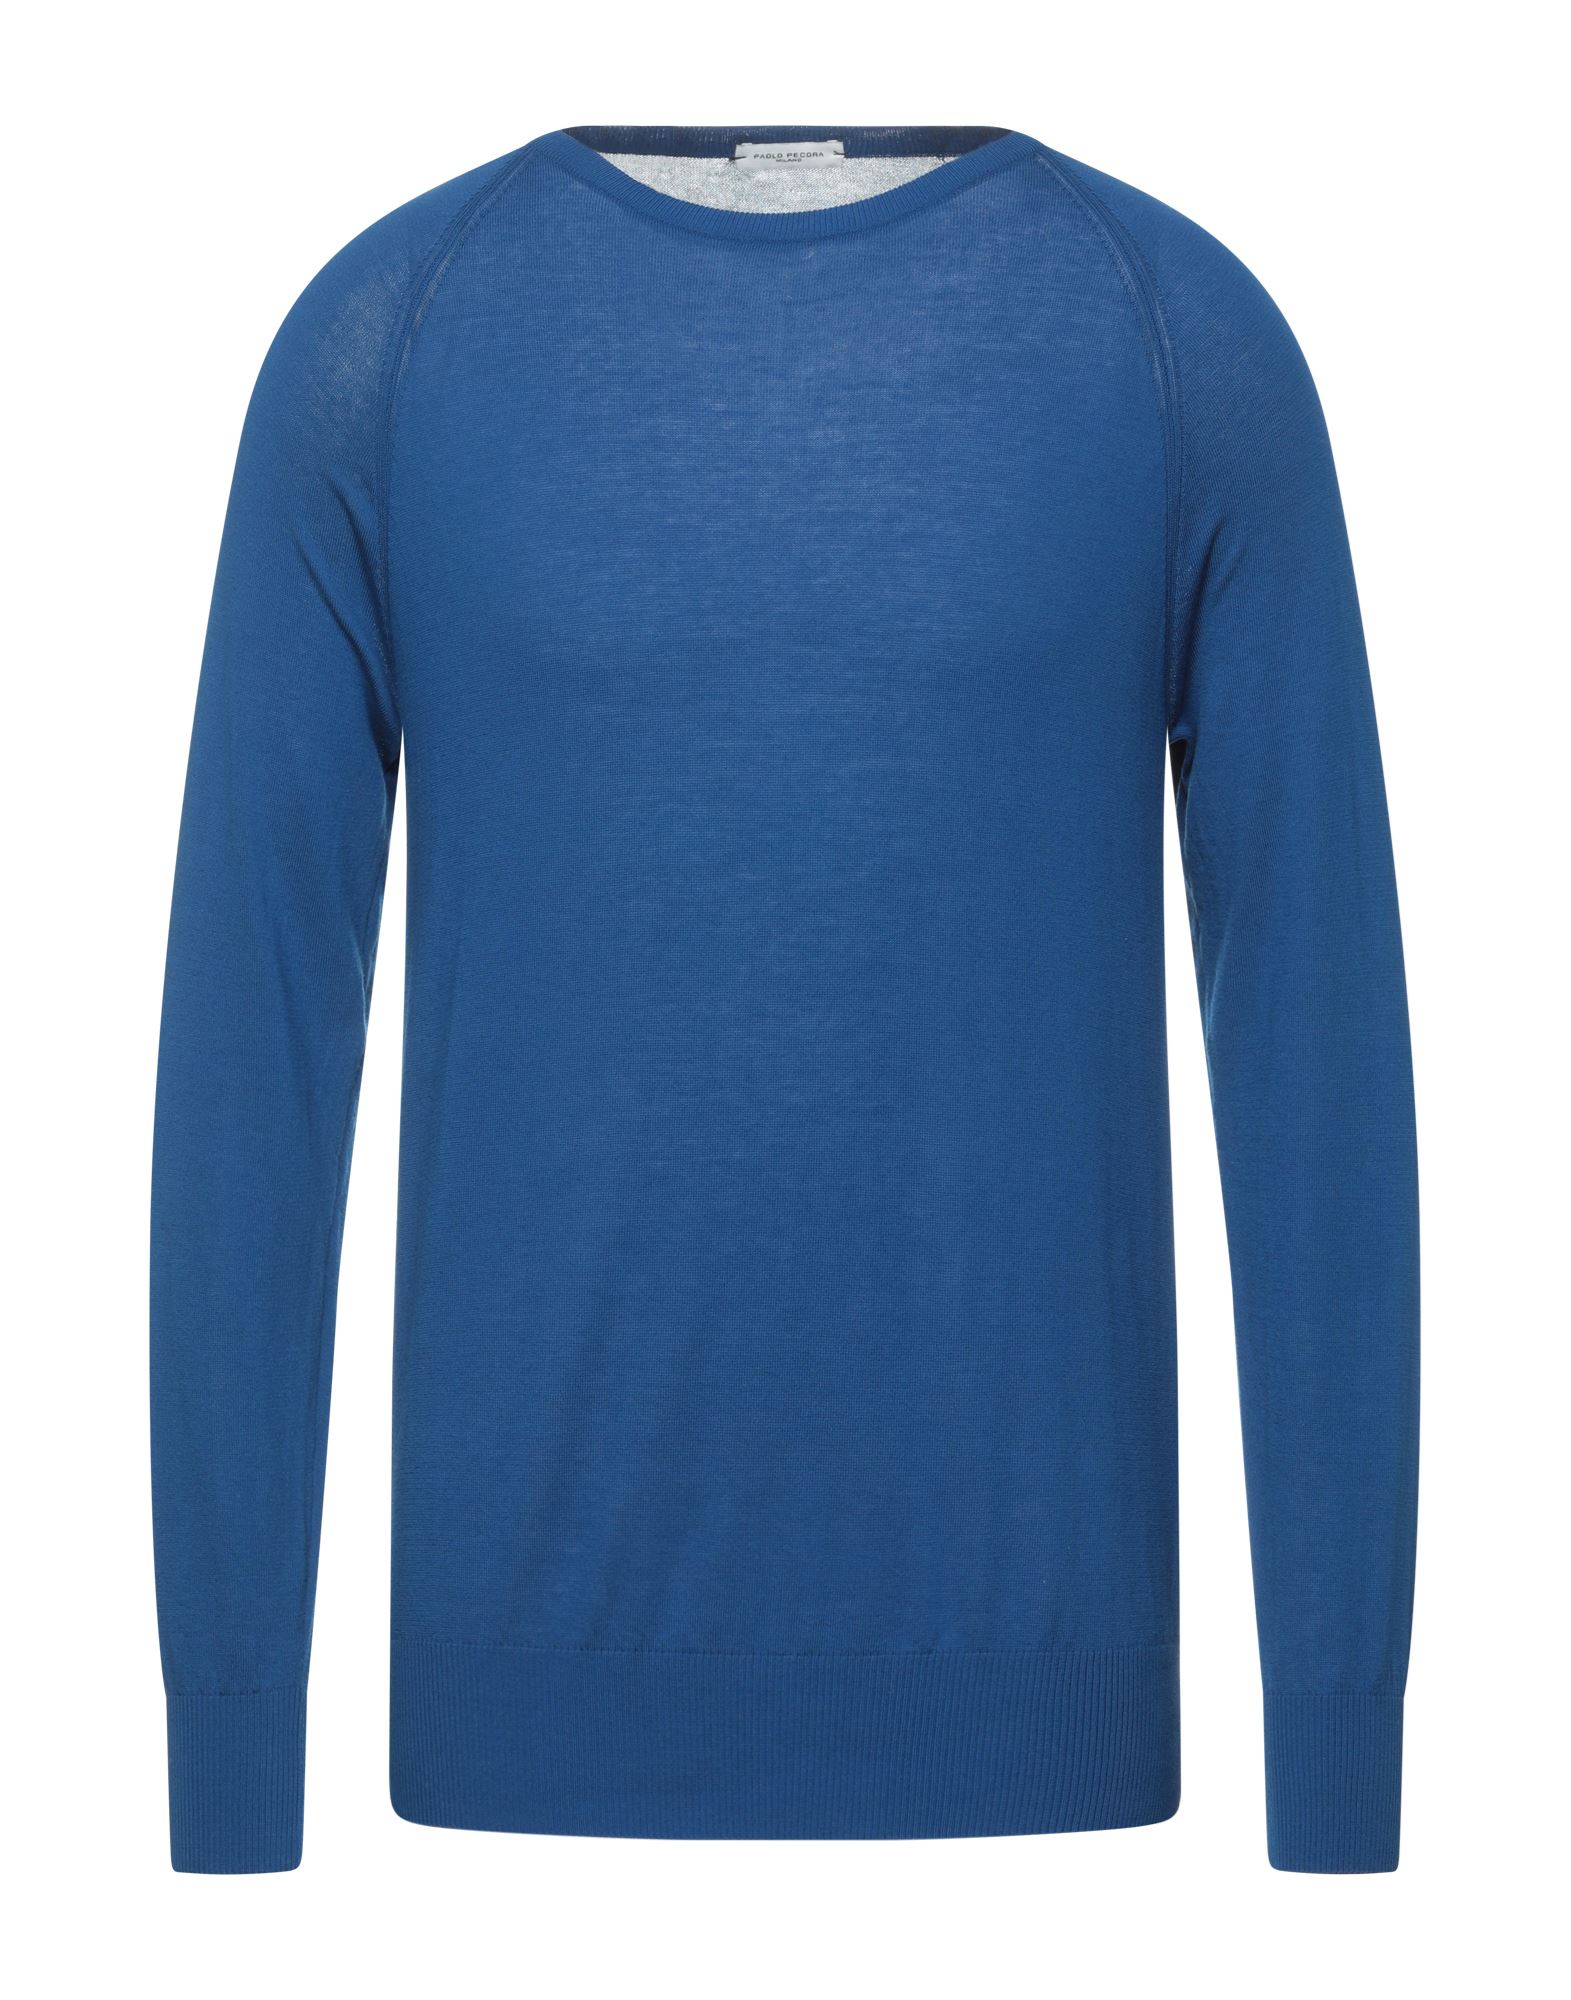 Paolo Pecora Sweaters In Bright Blue